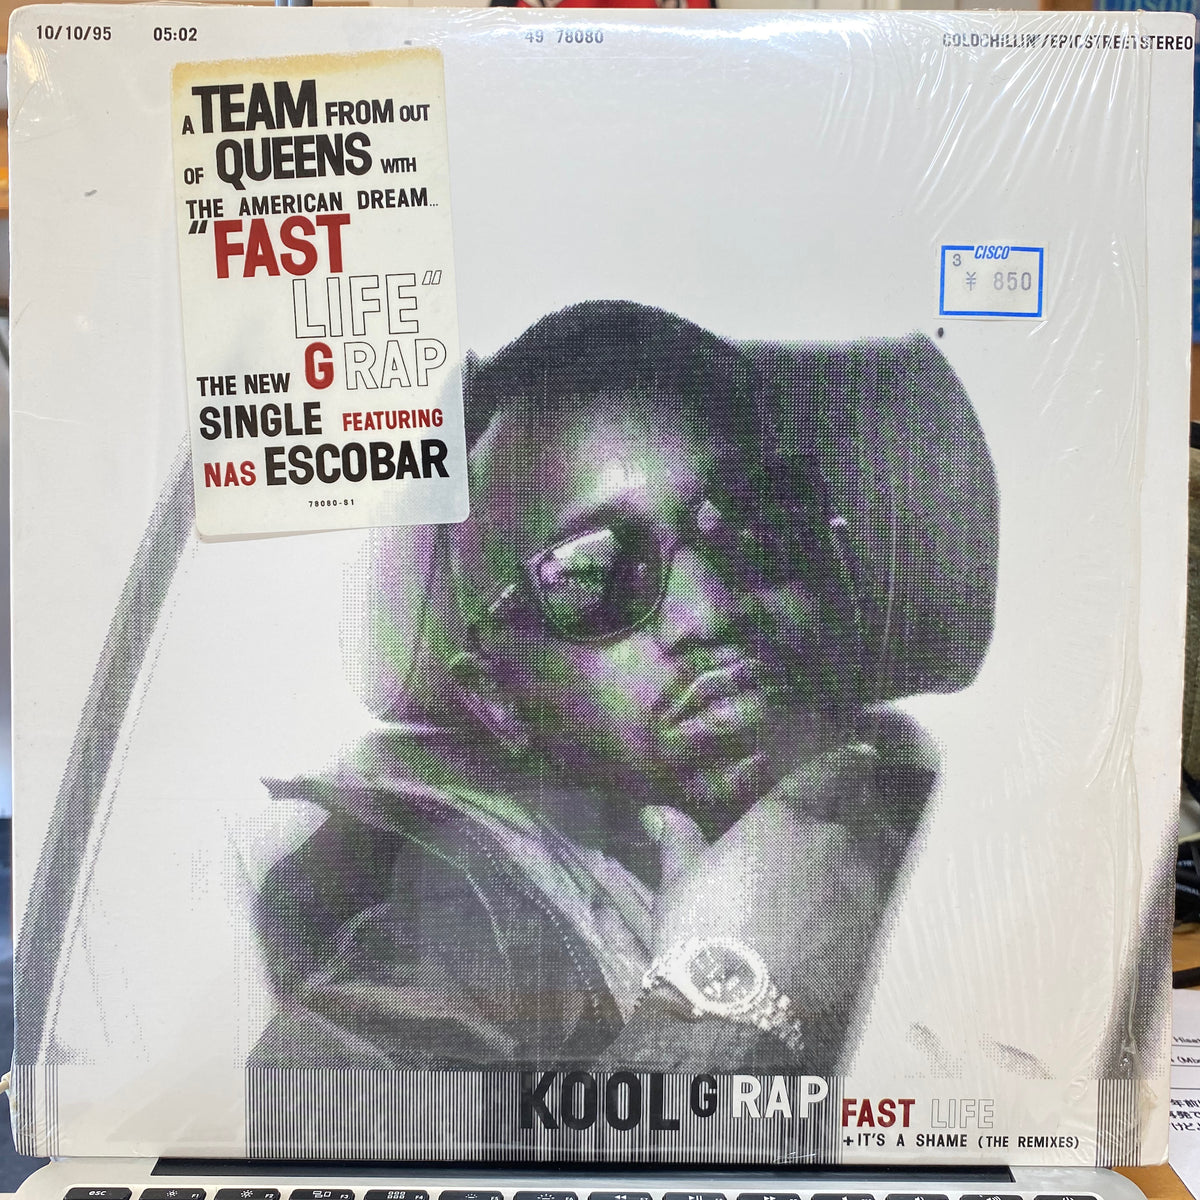 Kool G Rap & Nas - Fast Life Remixunderground